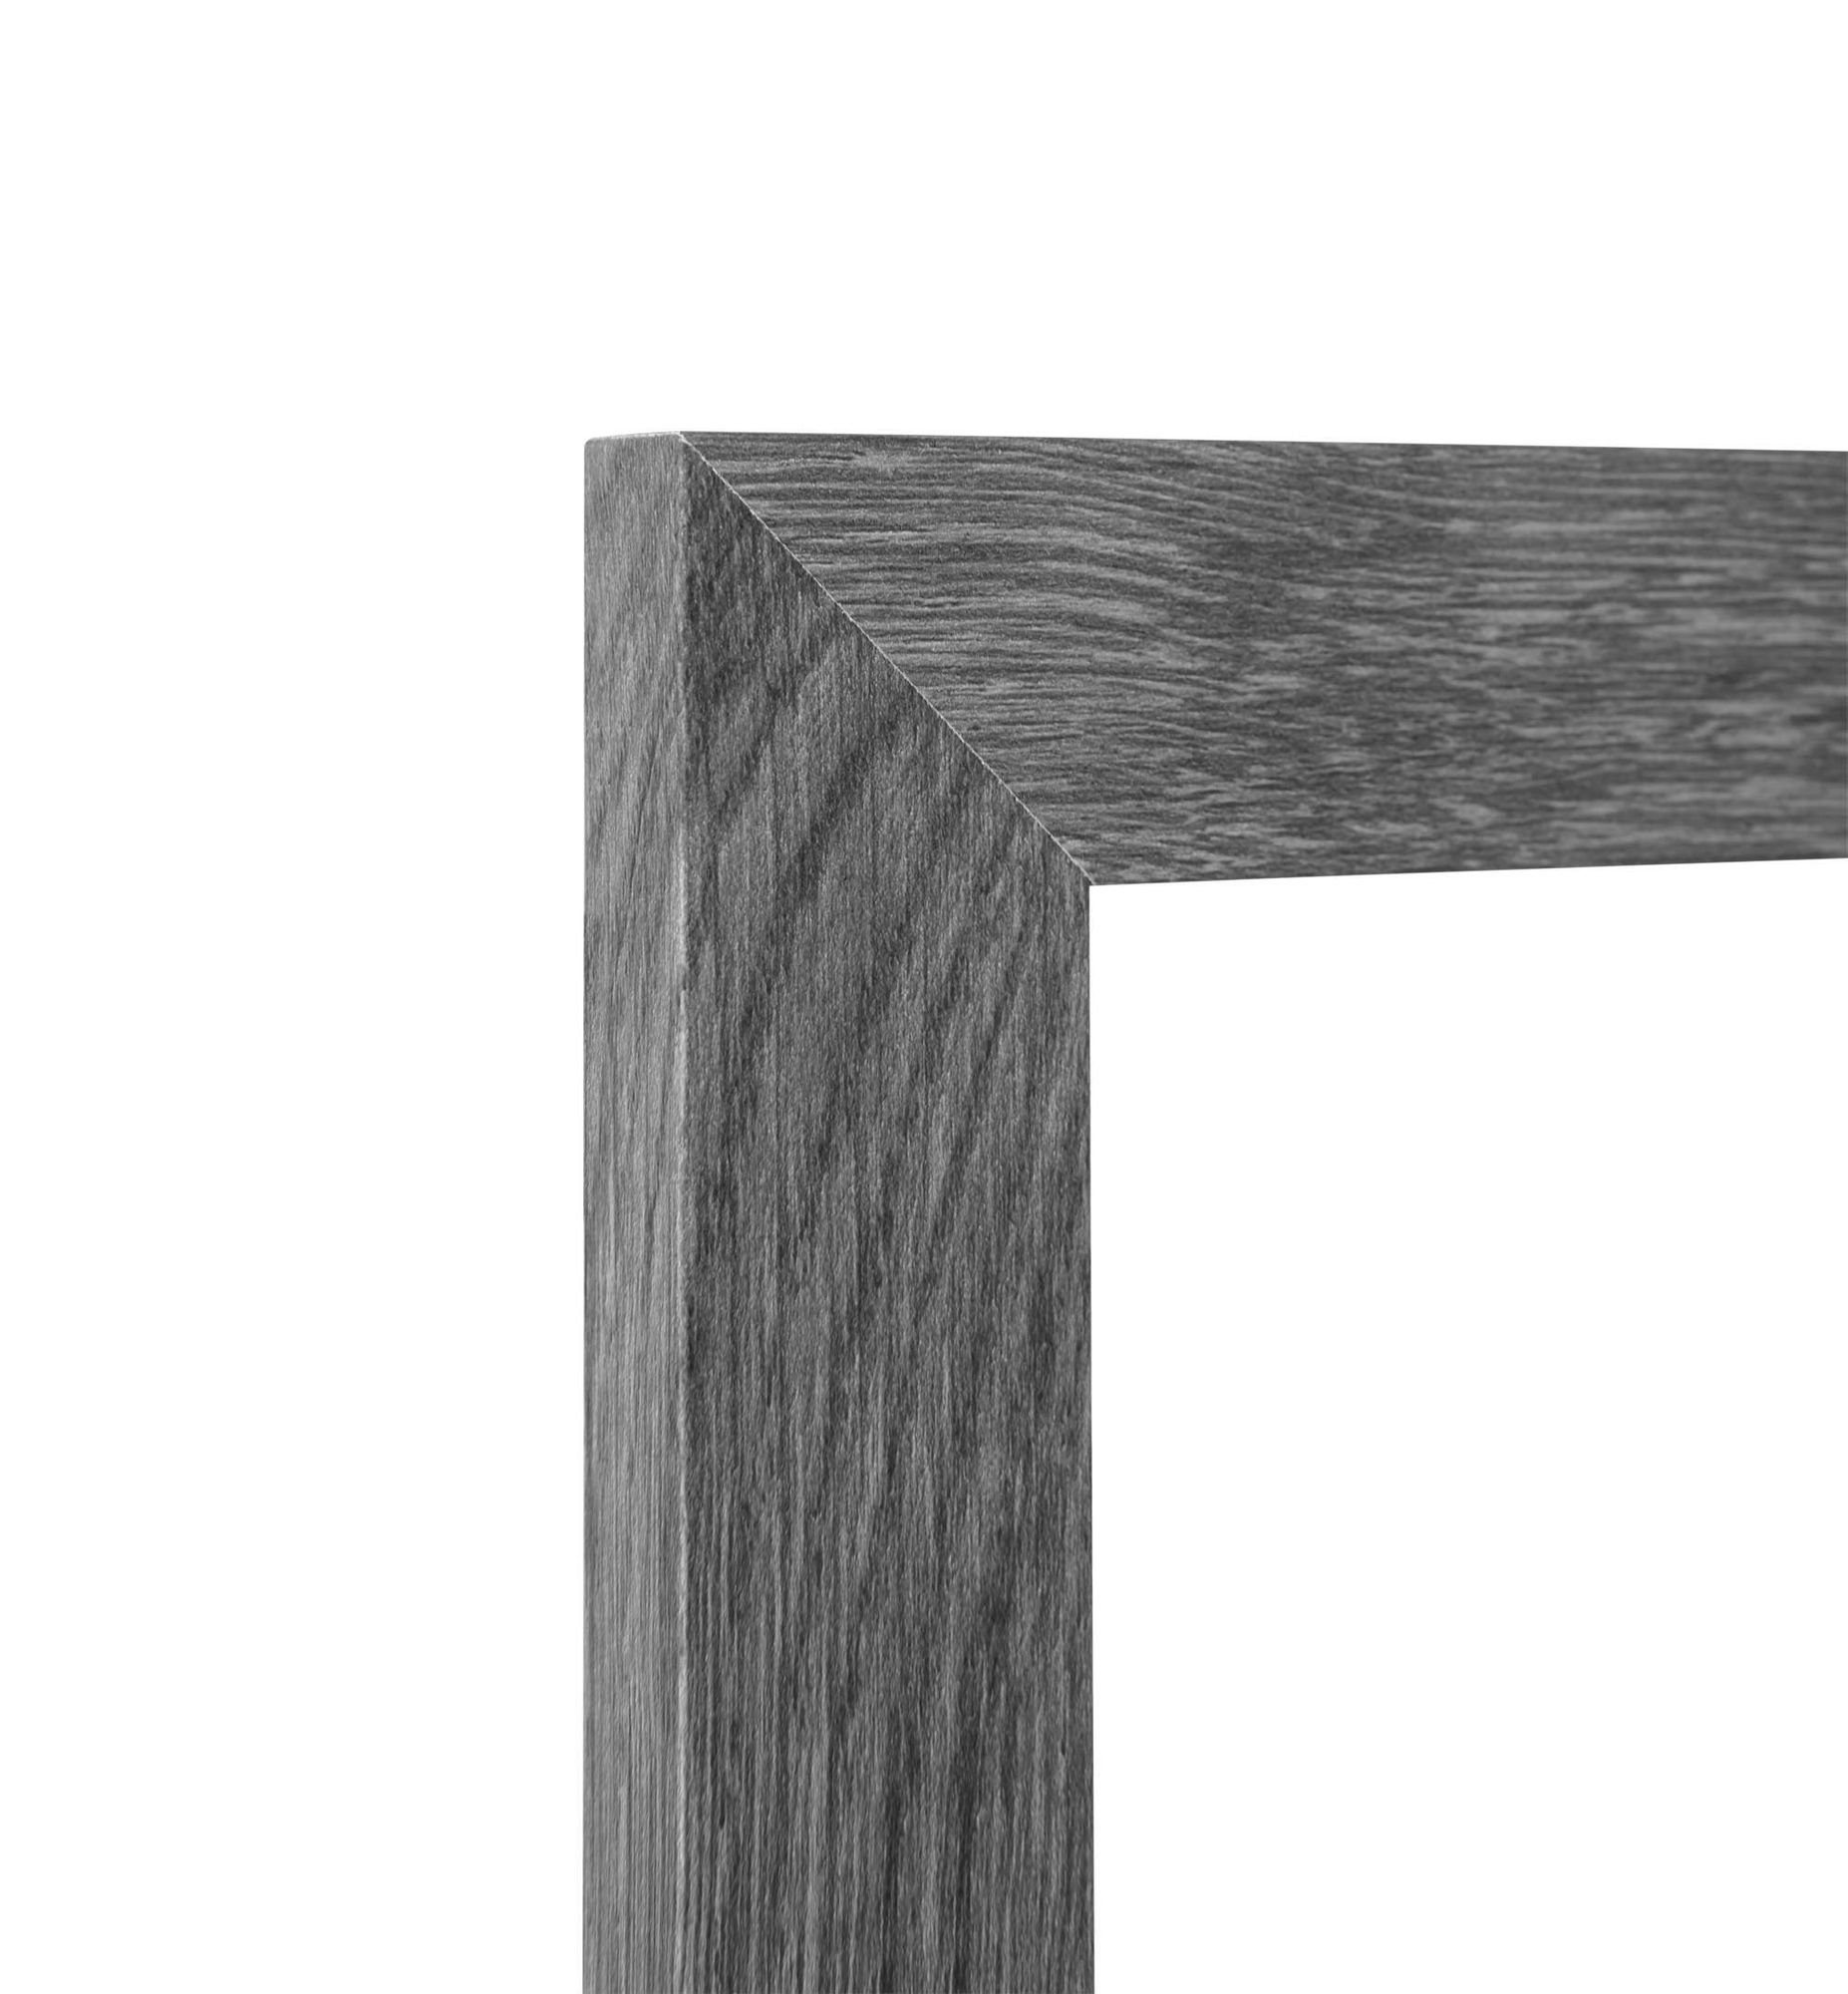 CLAMARO Aufhänger DIN 'Collage' eiche FSC® Holz Acrylglas, sonama MDF inkl. Clamaro und Bilderrahmen Rahmen Rahmen, Rückwand